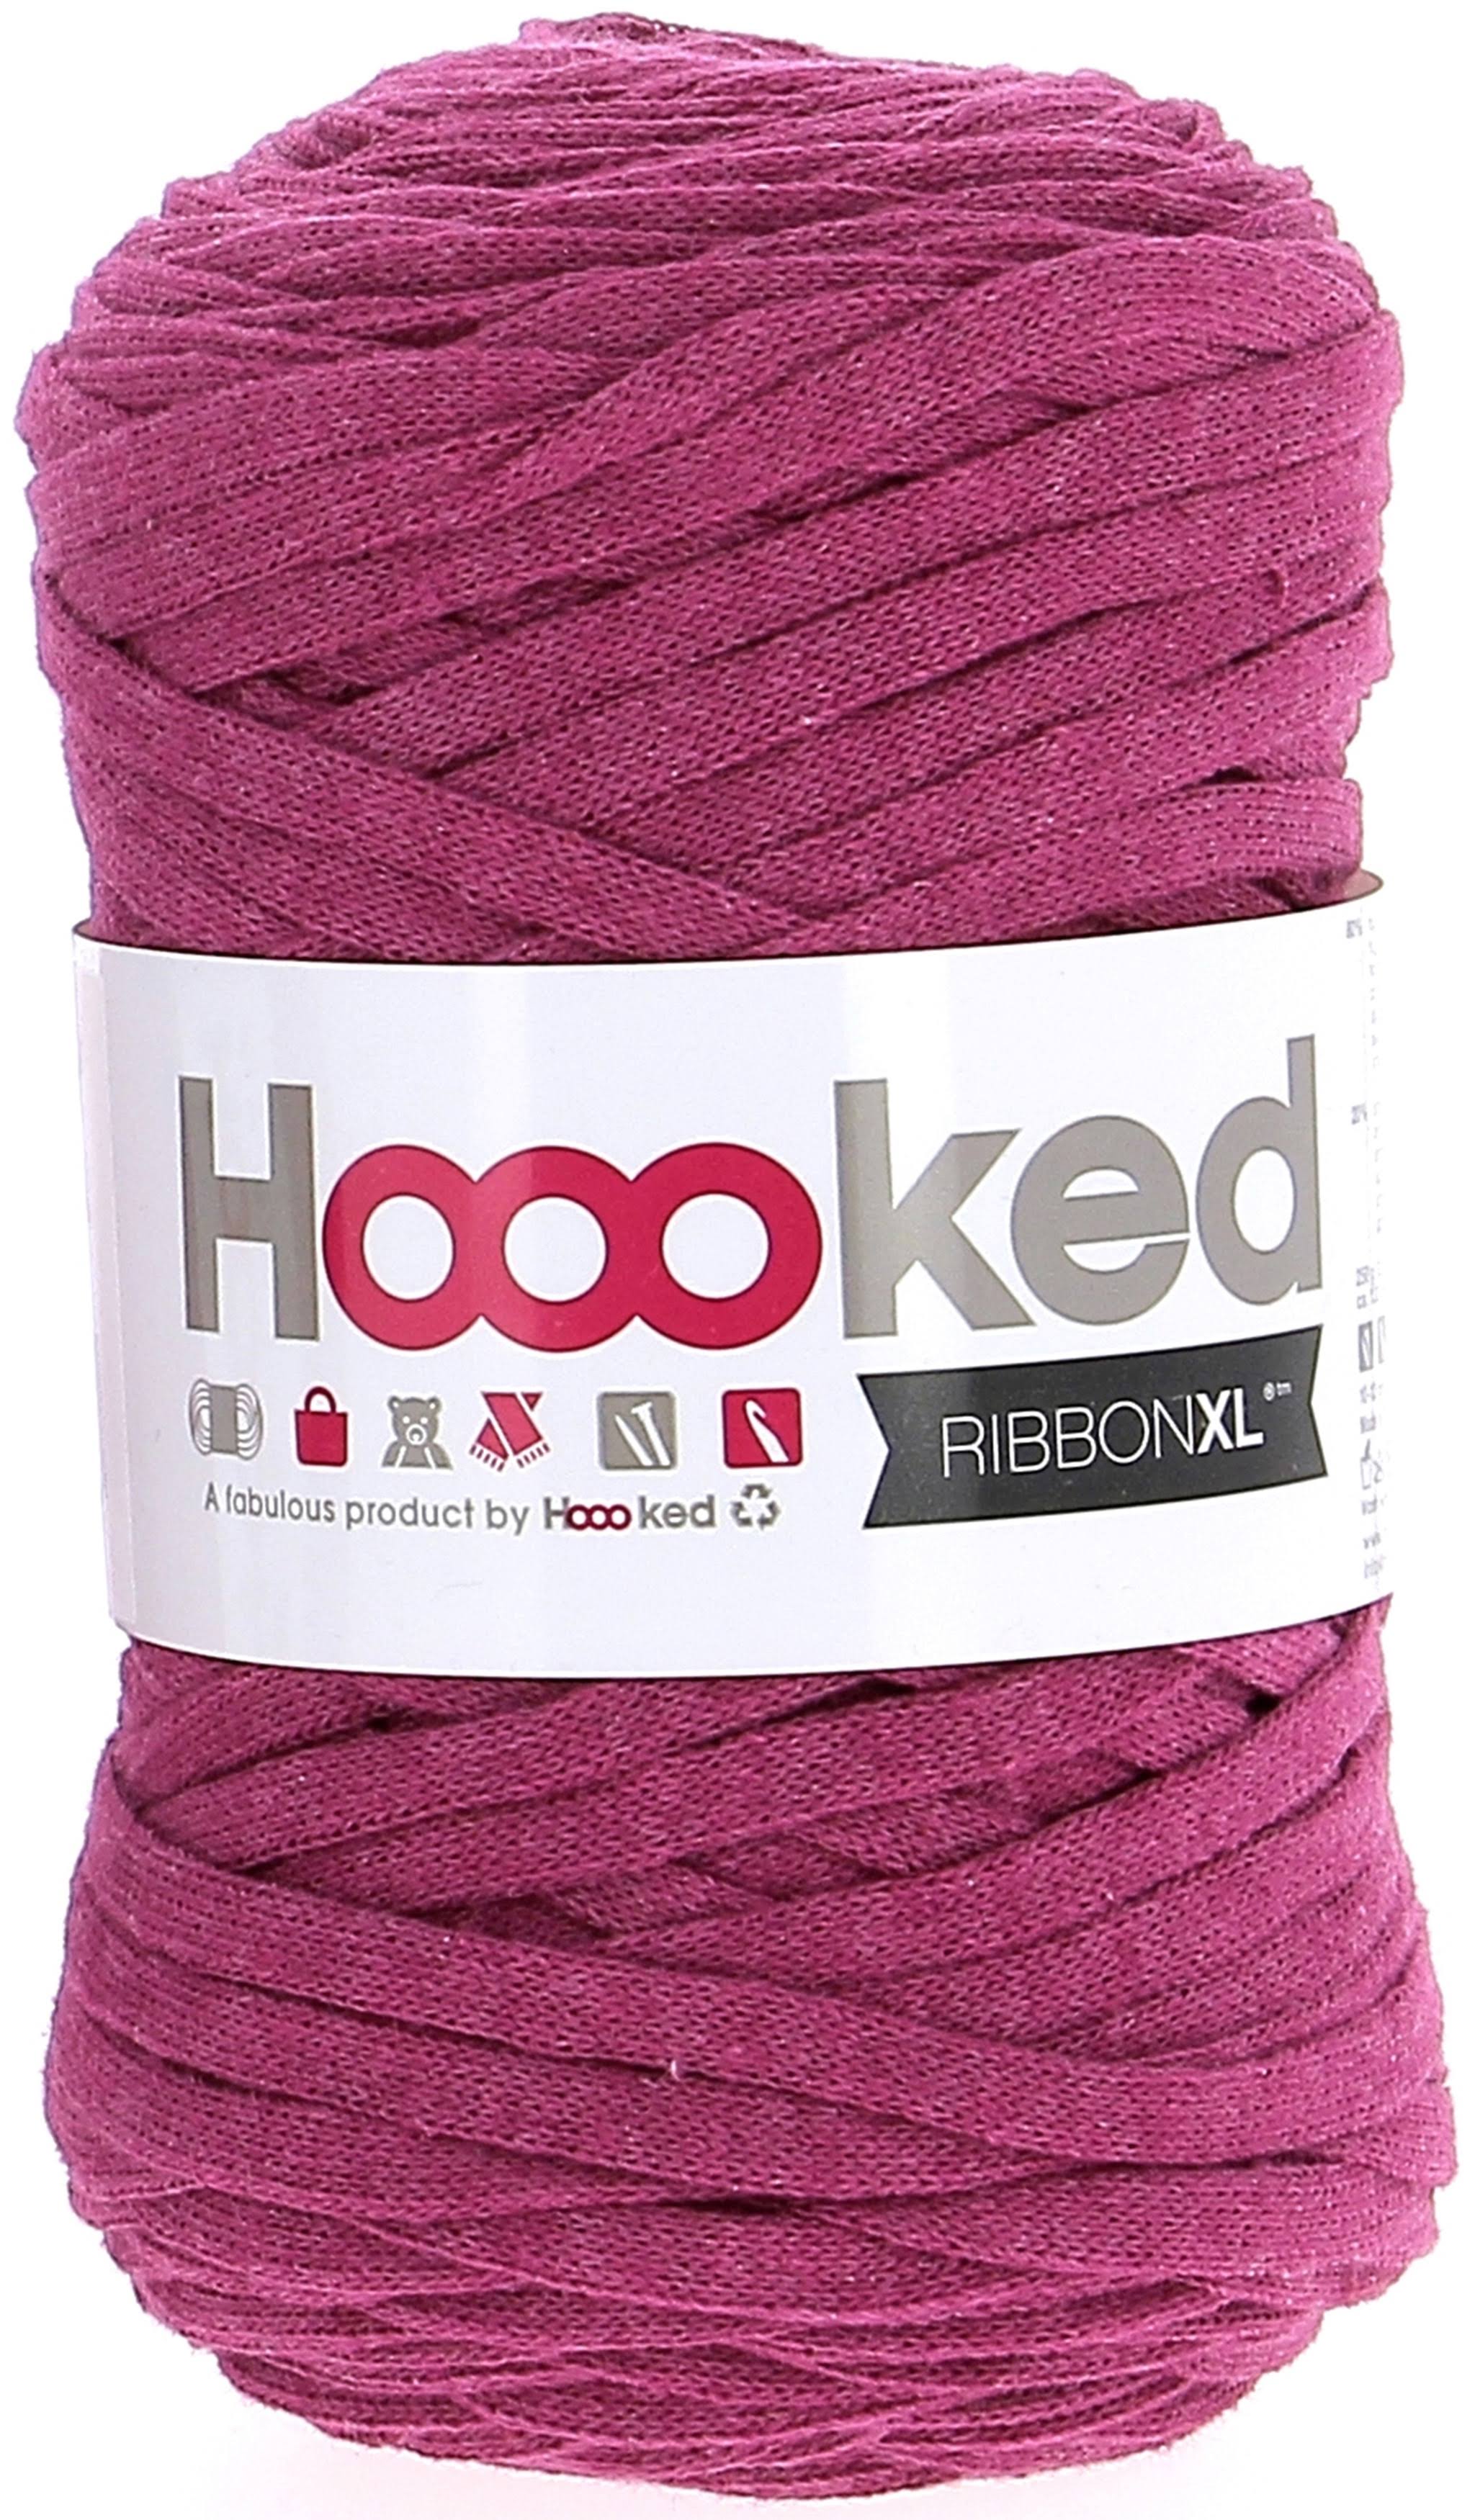 Hoooked Ribbon XL Yarn - Crazy Plum